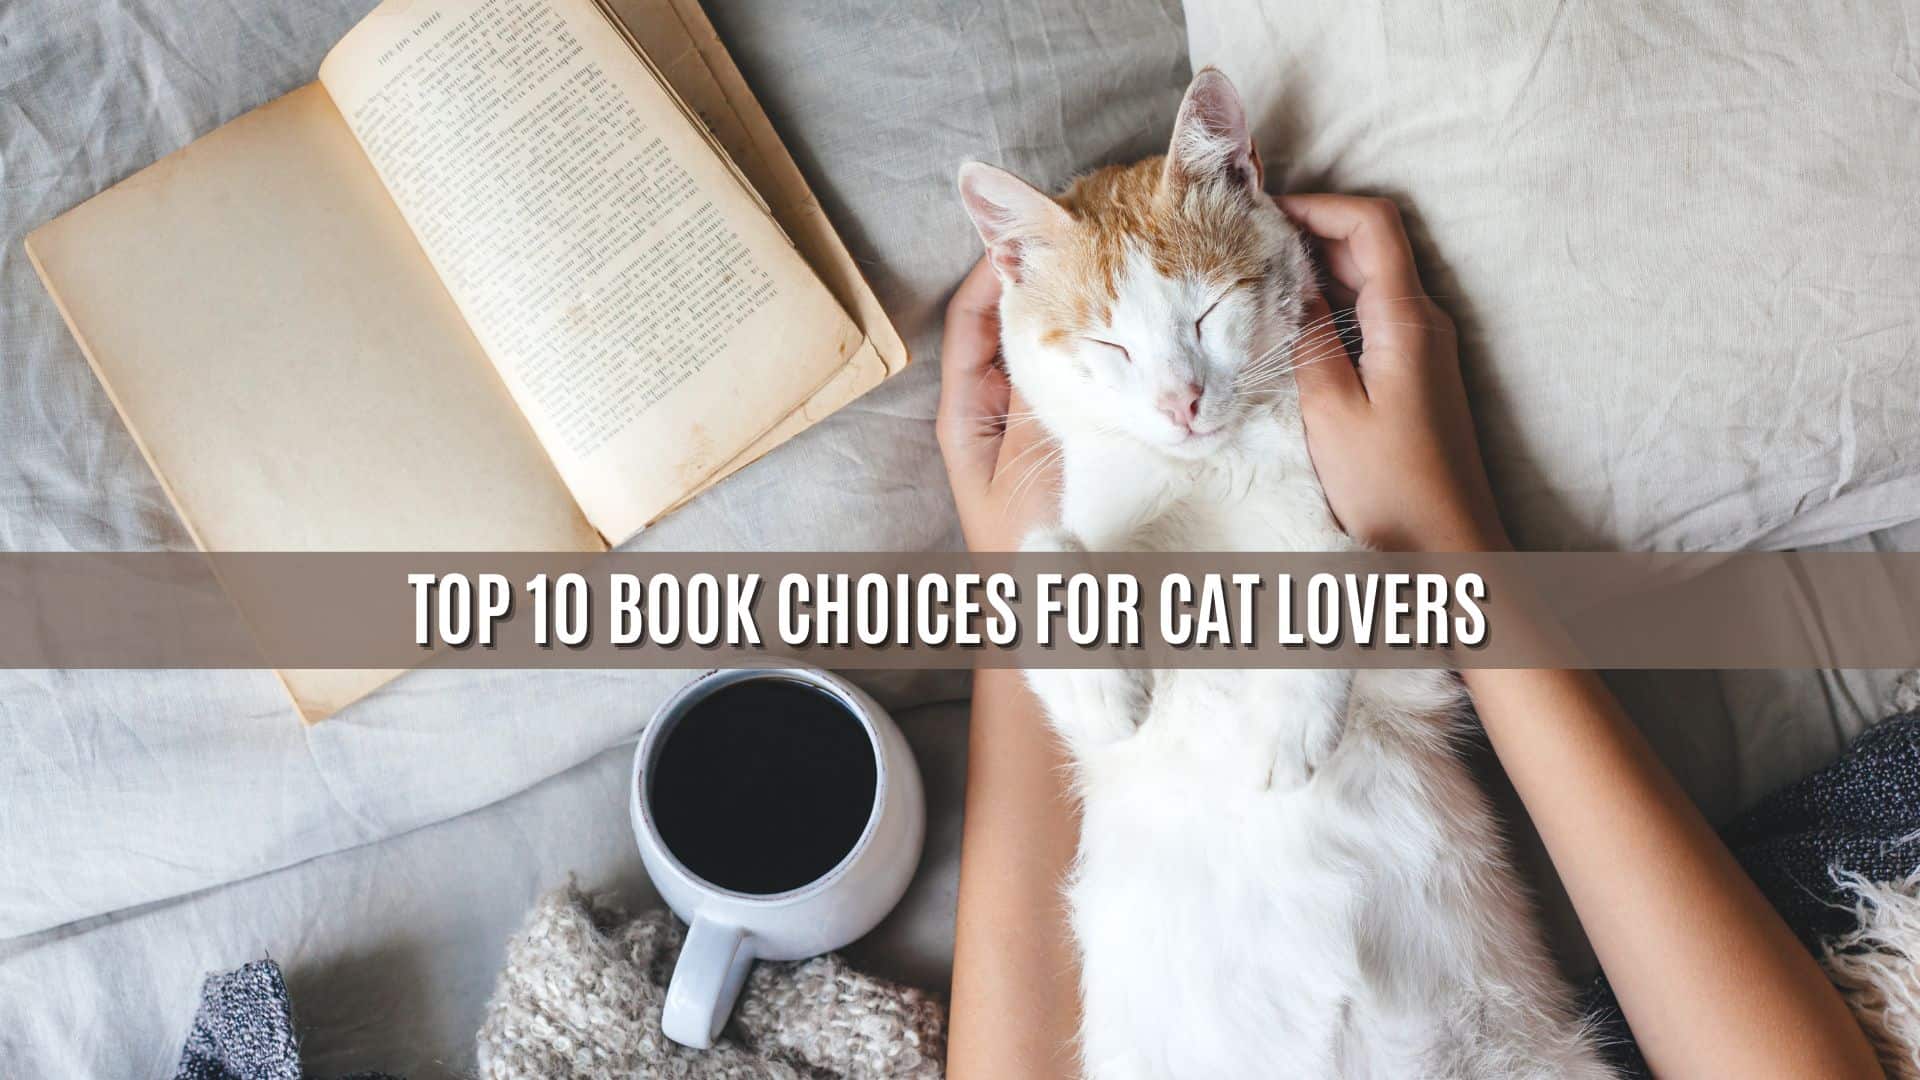 a woman caresses a cat next to an open book